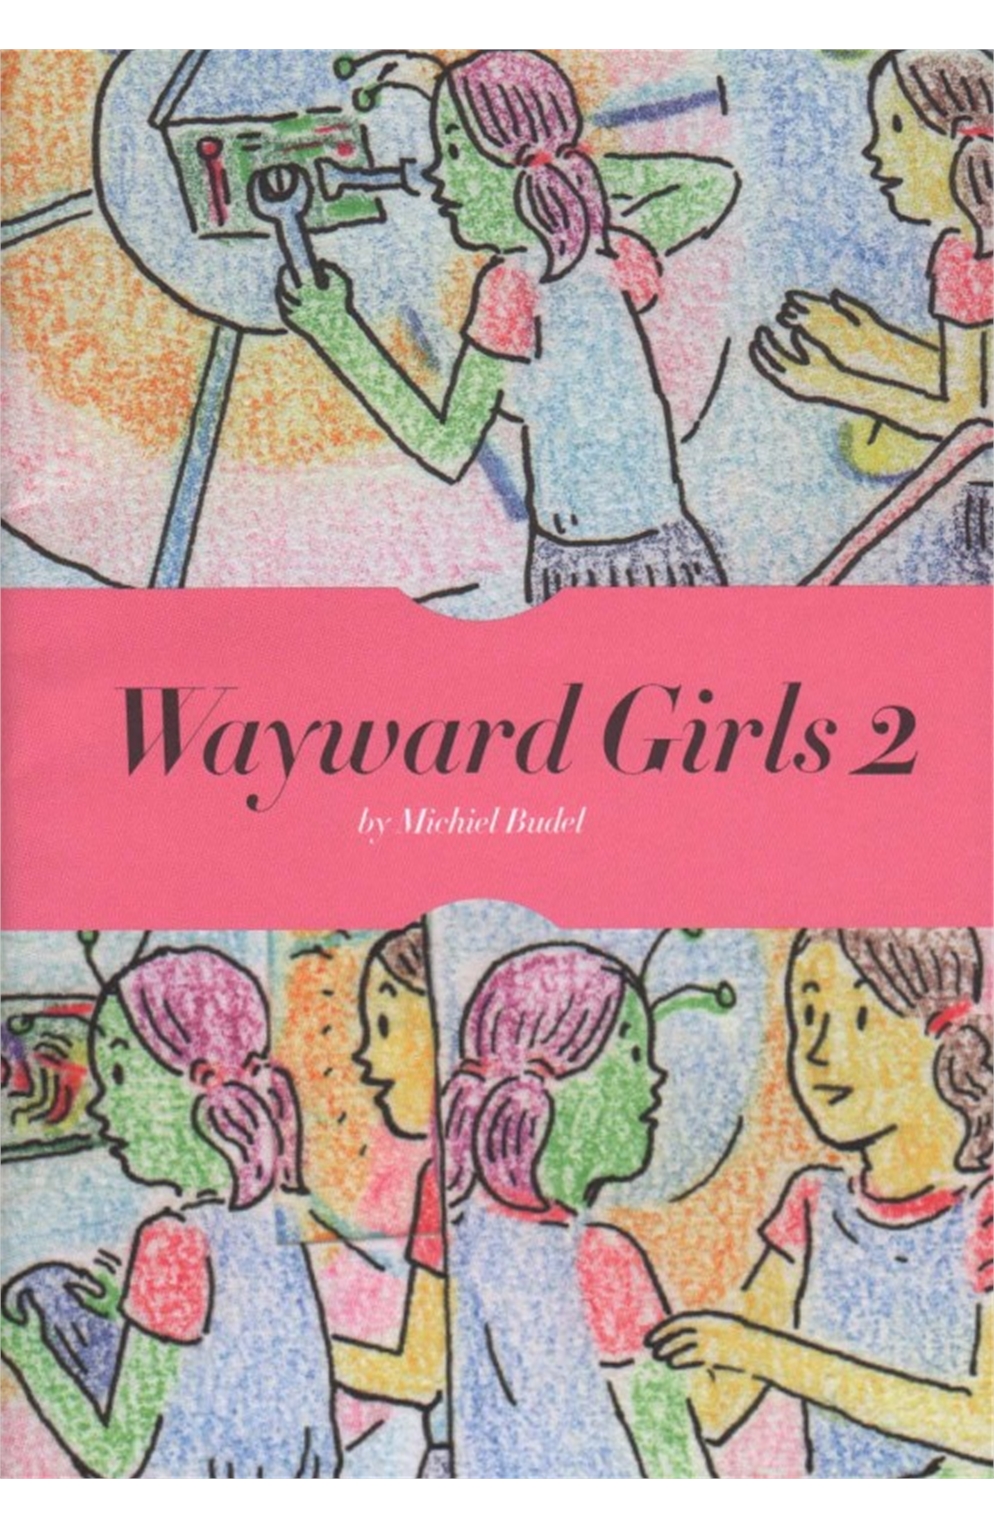 Wayward Girls #2